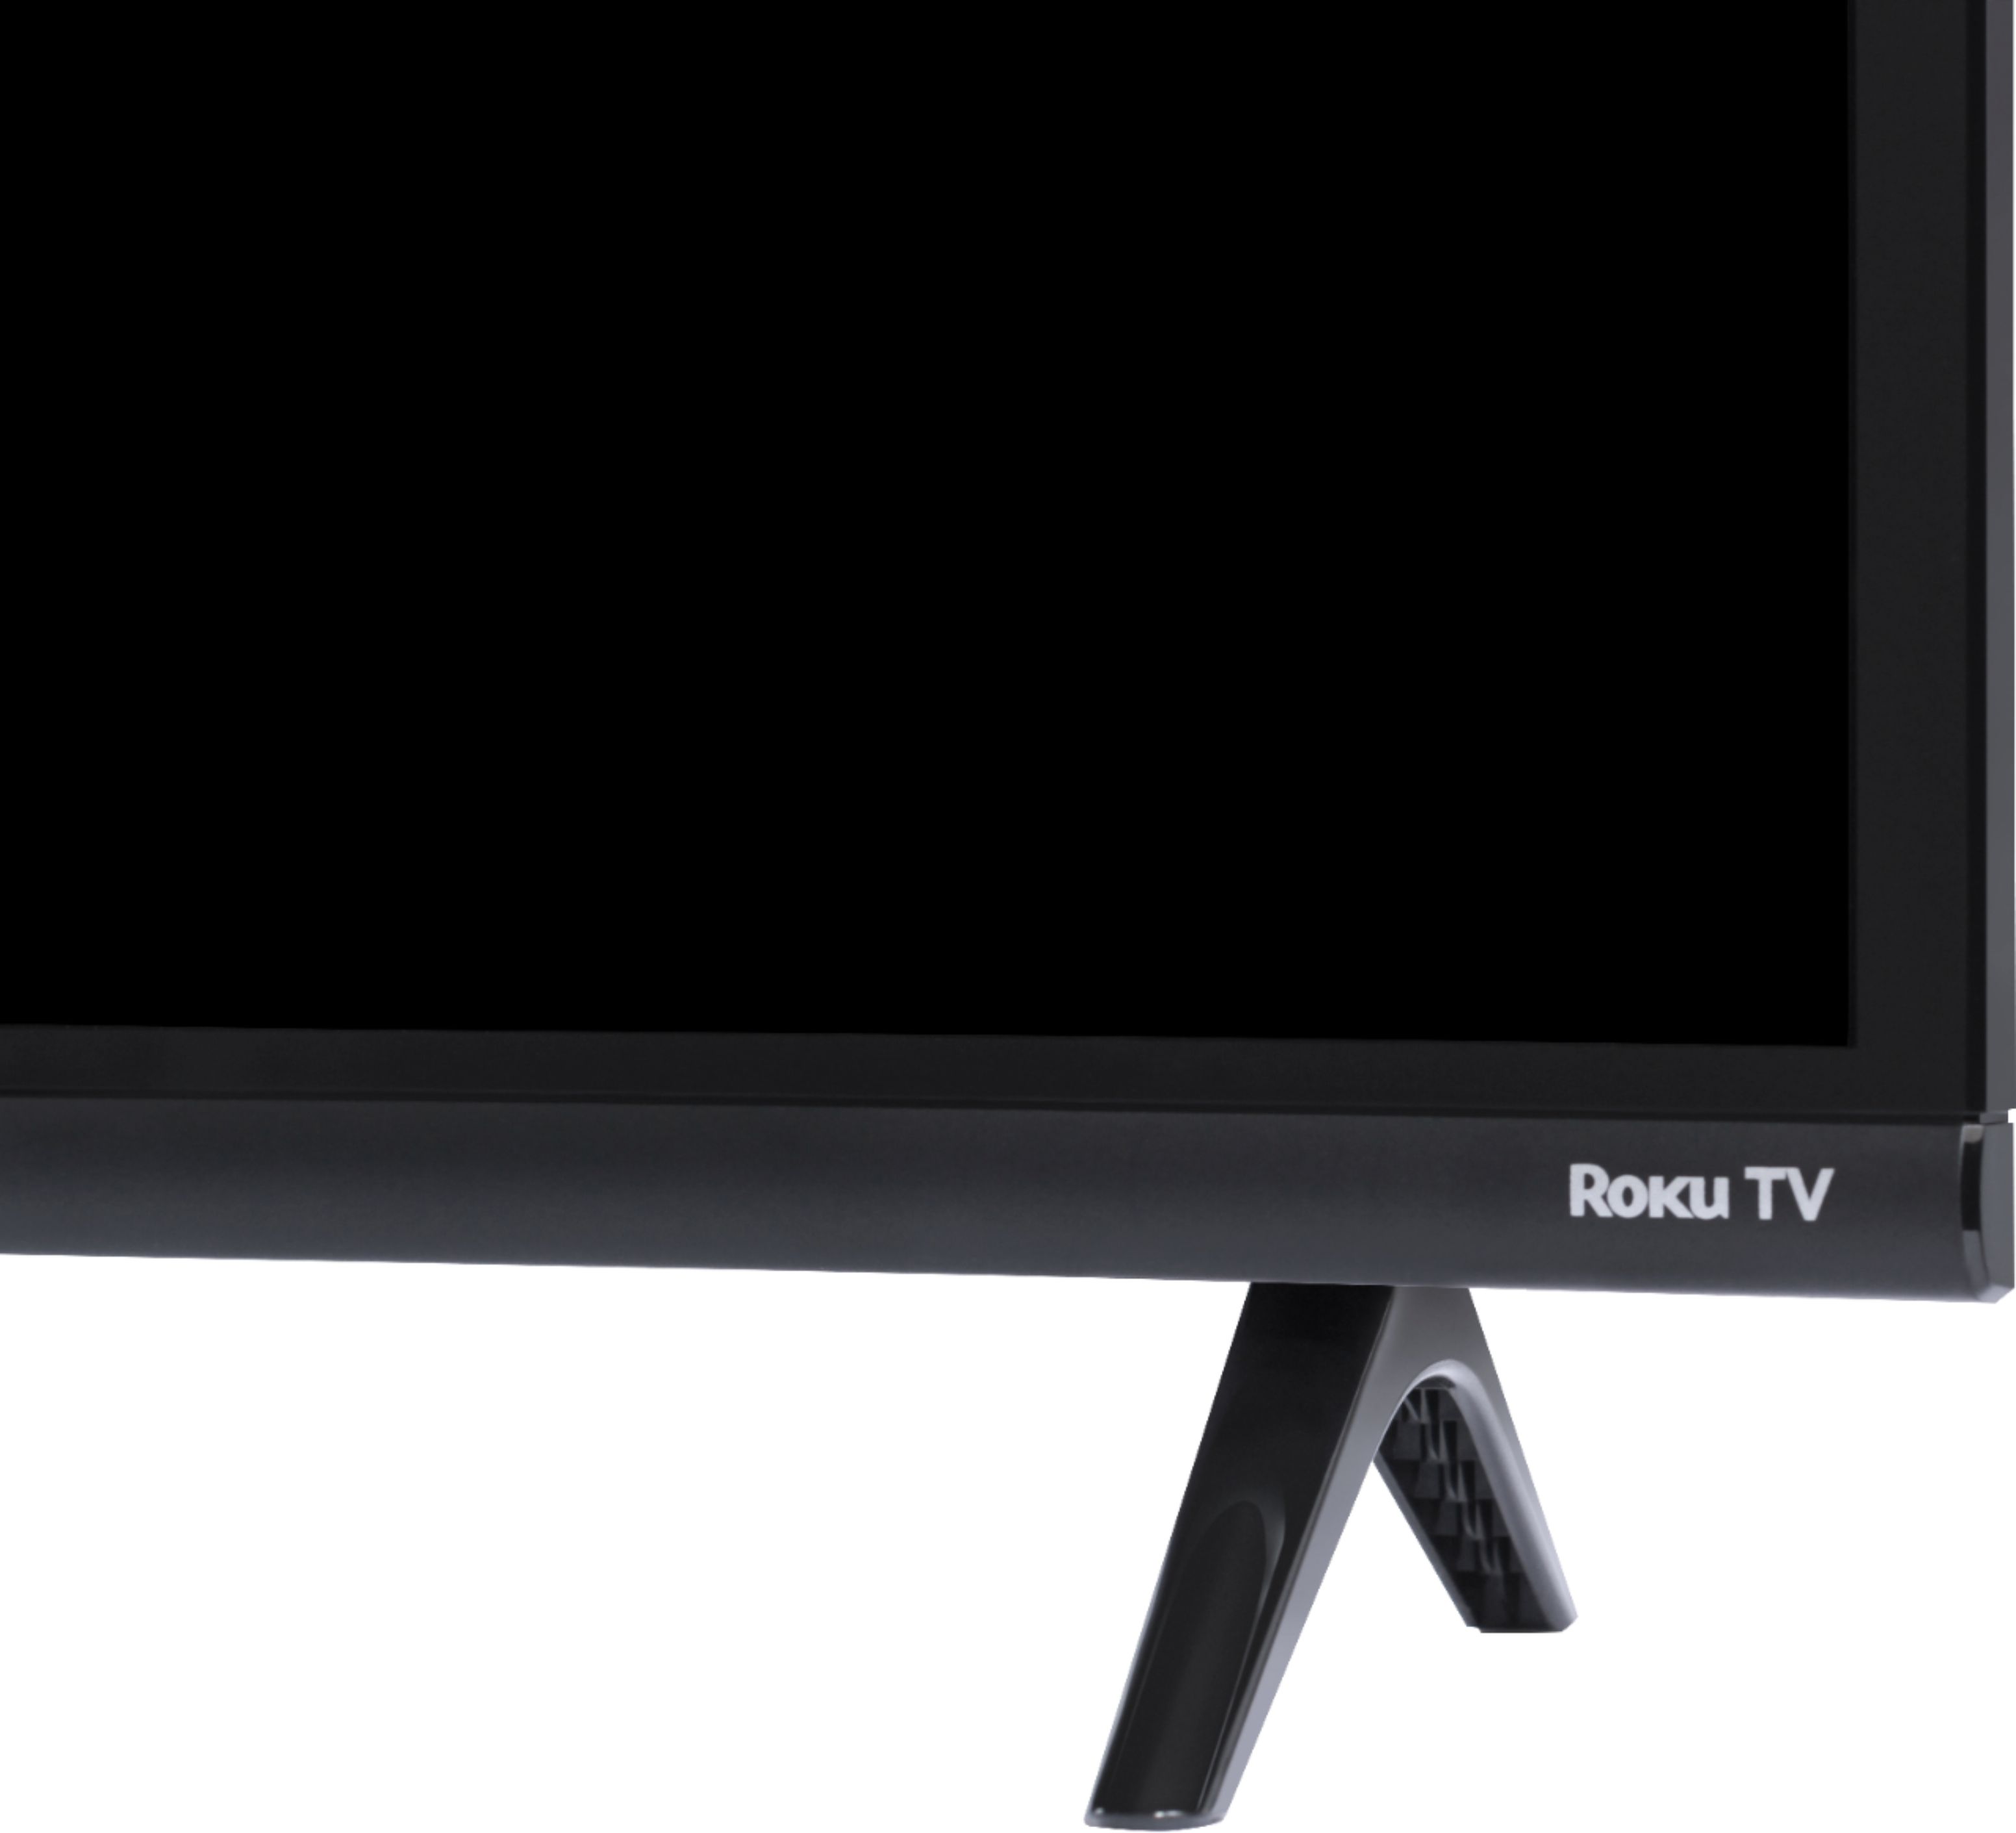 TCL 32 Class 720P HD LED Roku Smart TV 3 Series 32S331